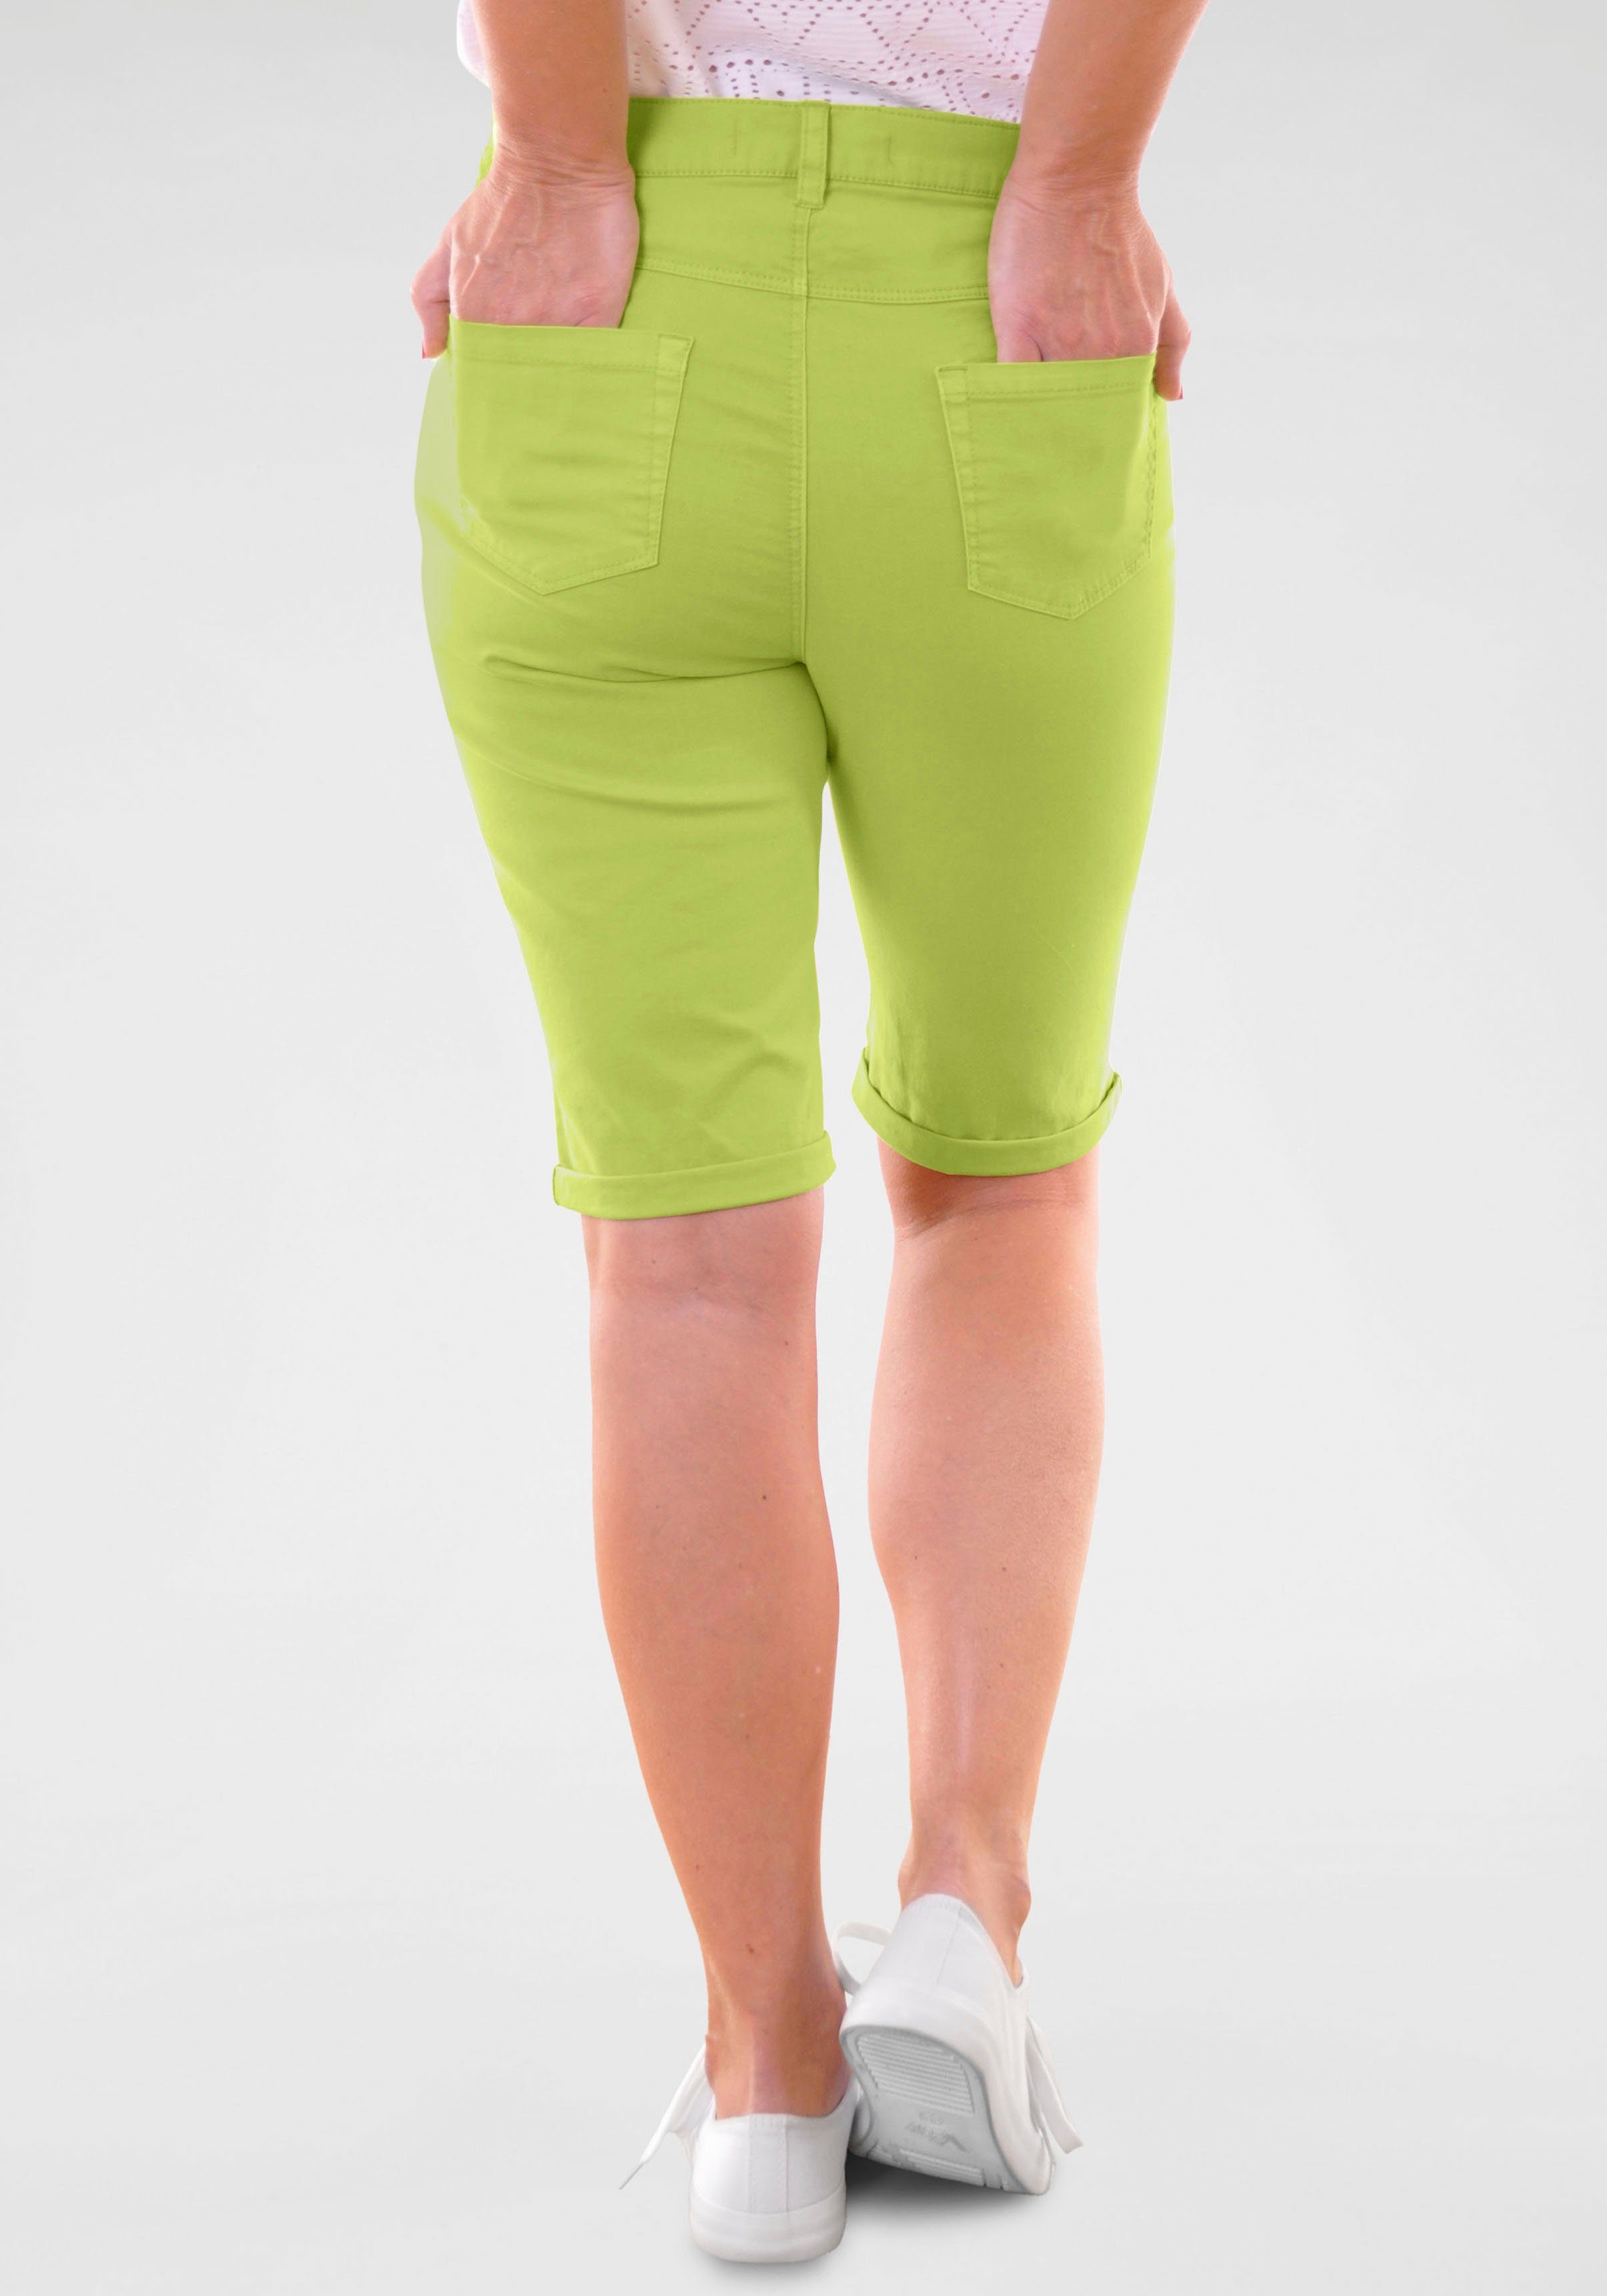 avocado 5-Pocket Form NAVIGAZIONE Shorts in